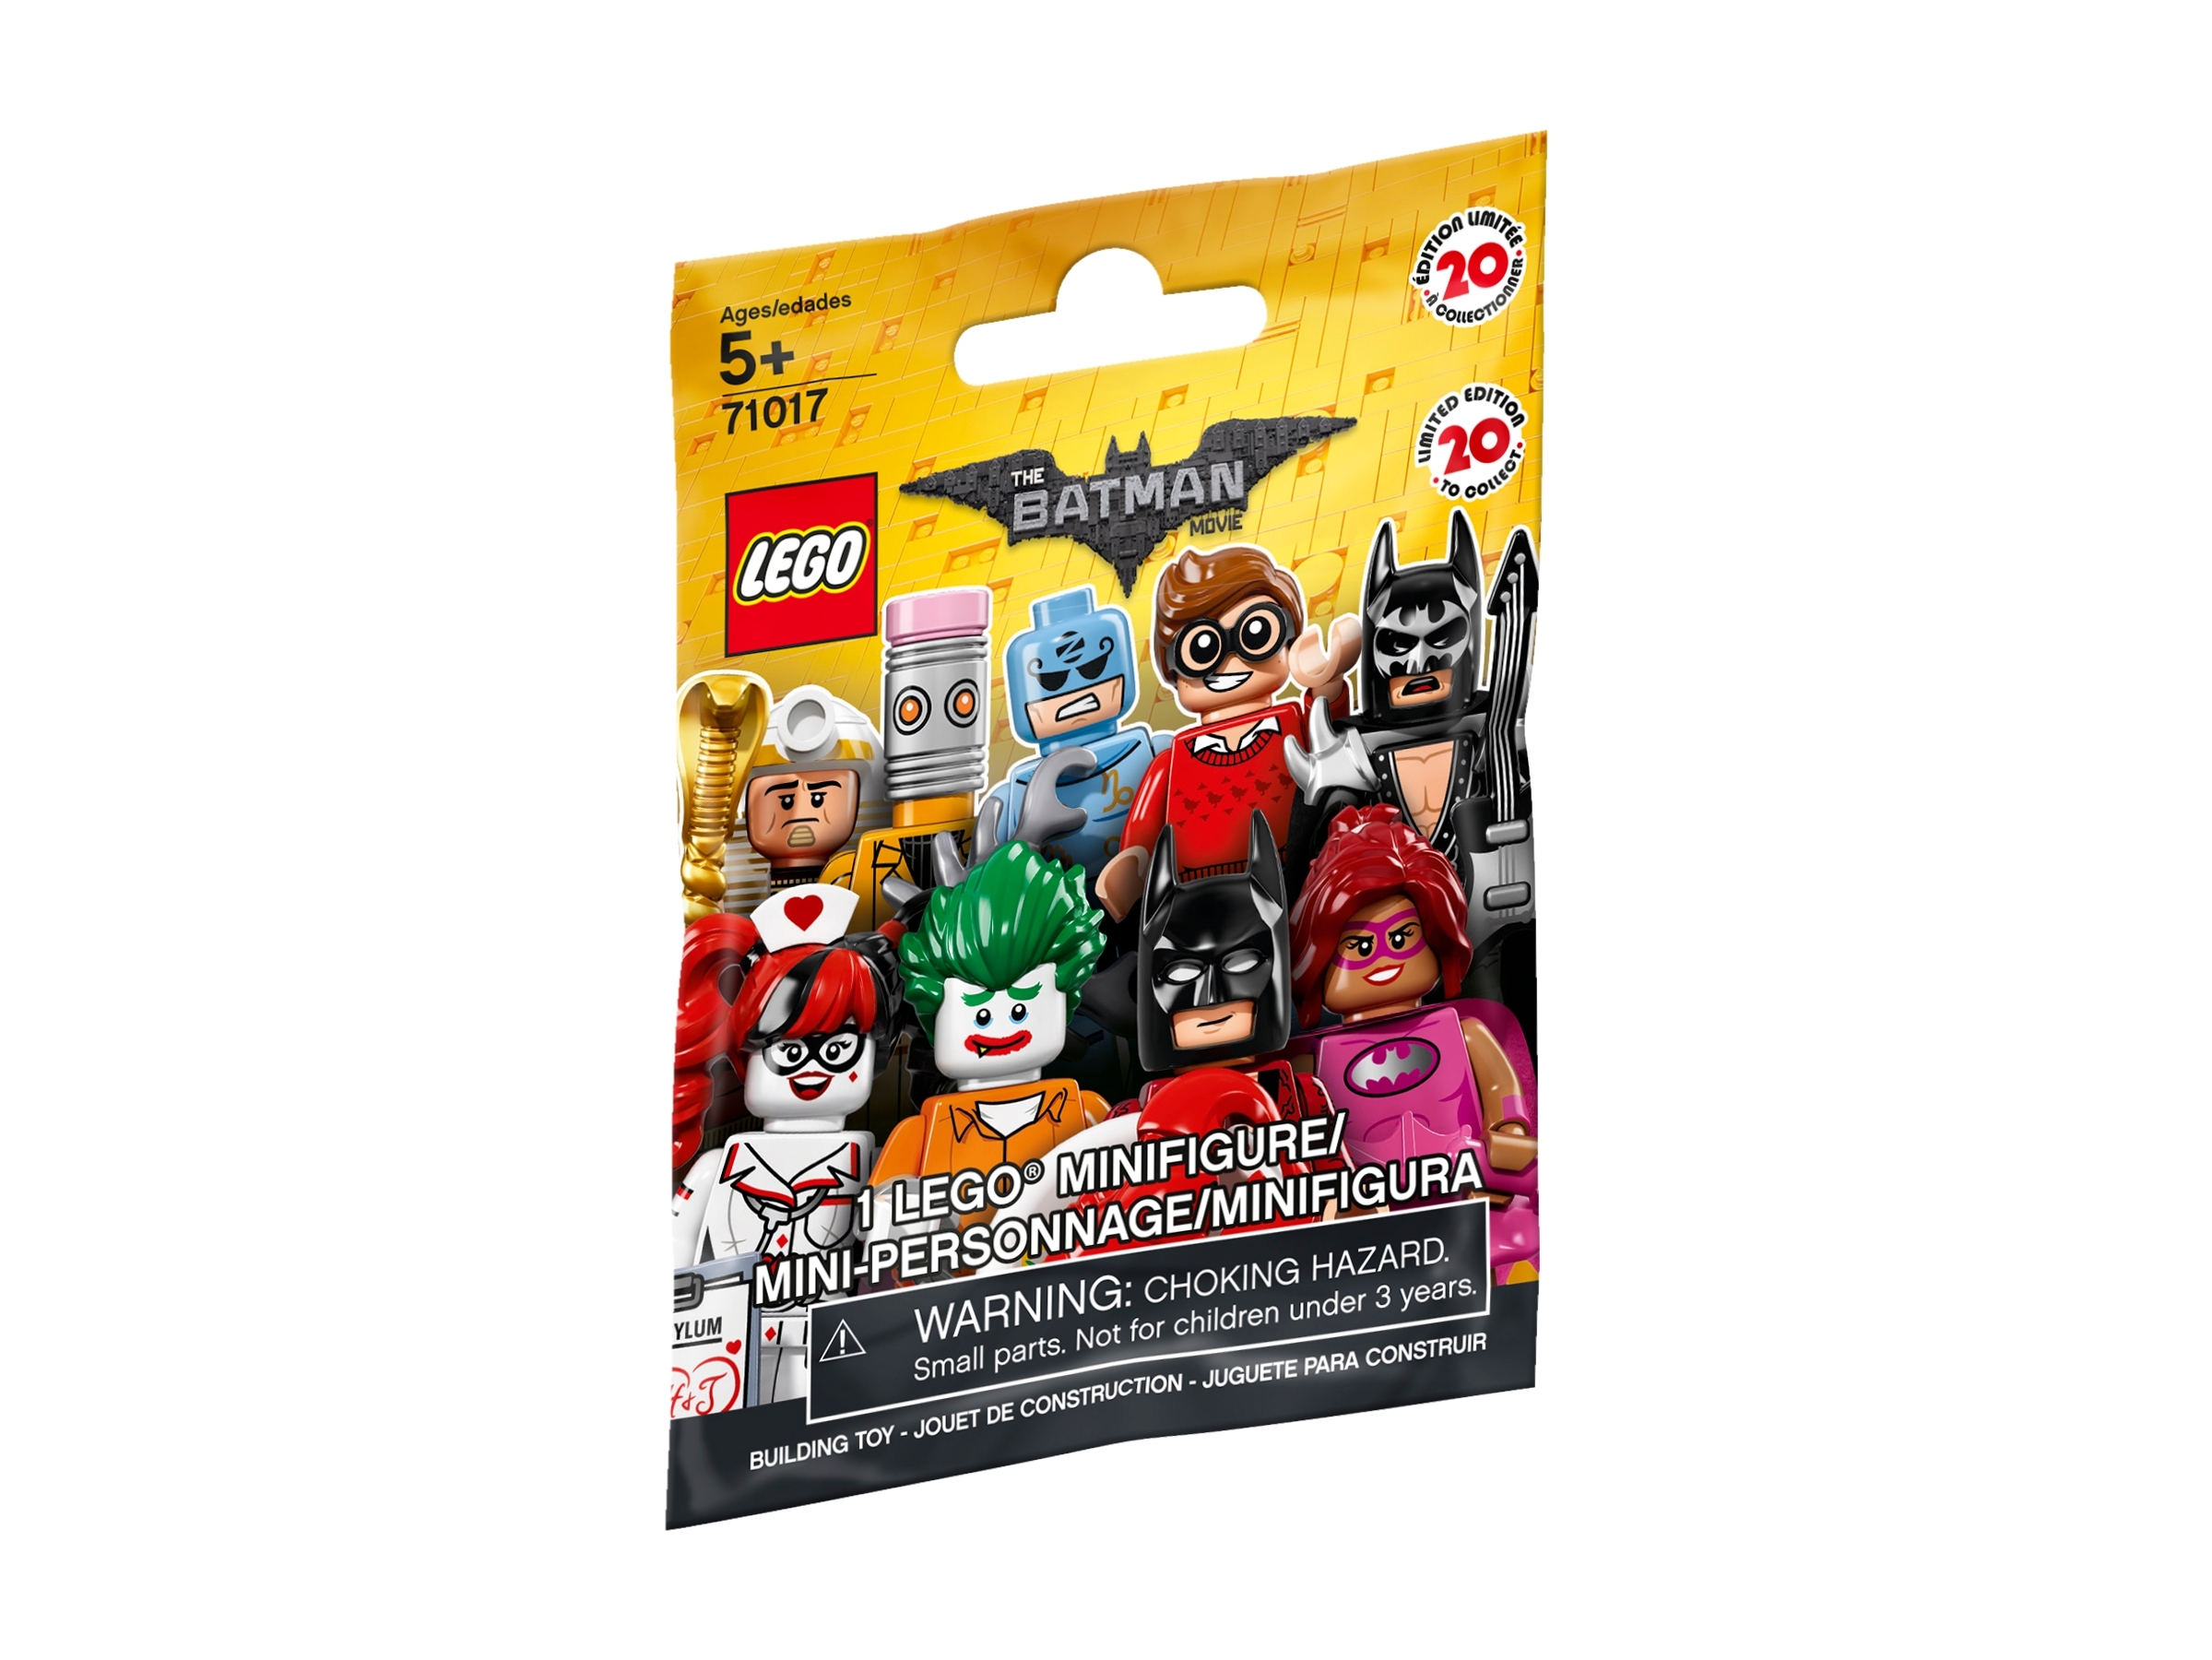 You Pick & Choose LEGO 71017 LEGO BATMAN MOVIE MINIFIGURES New & Sealed 